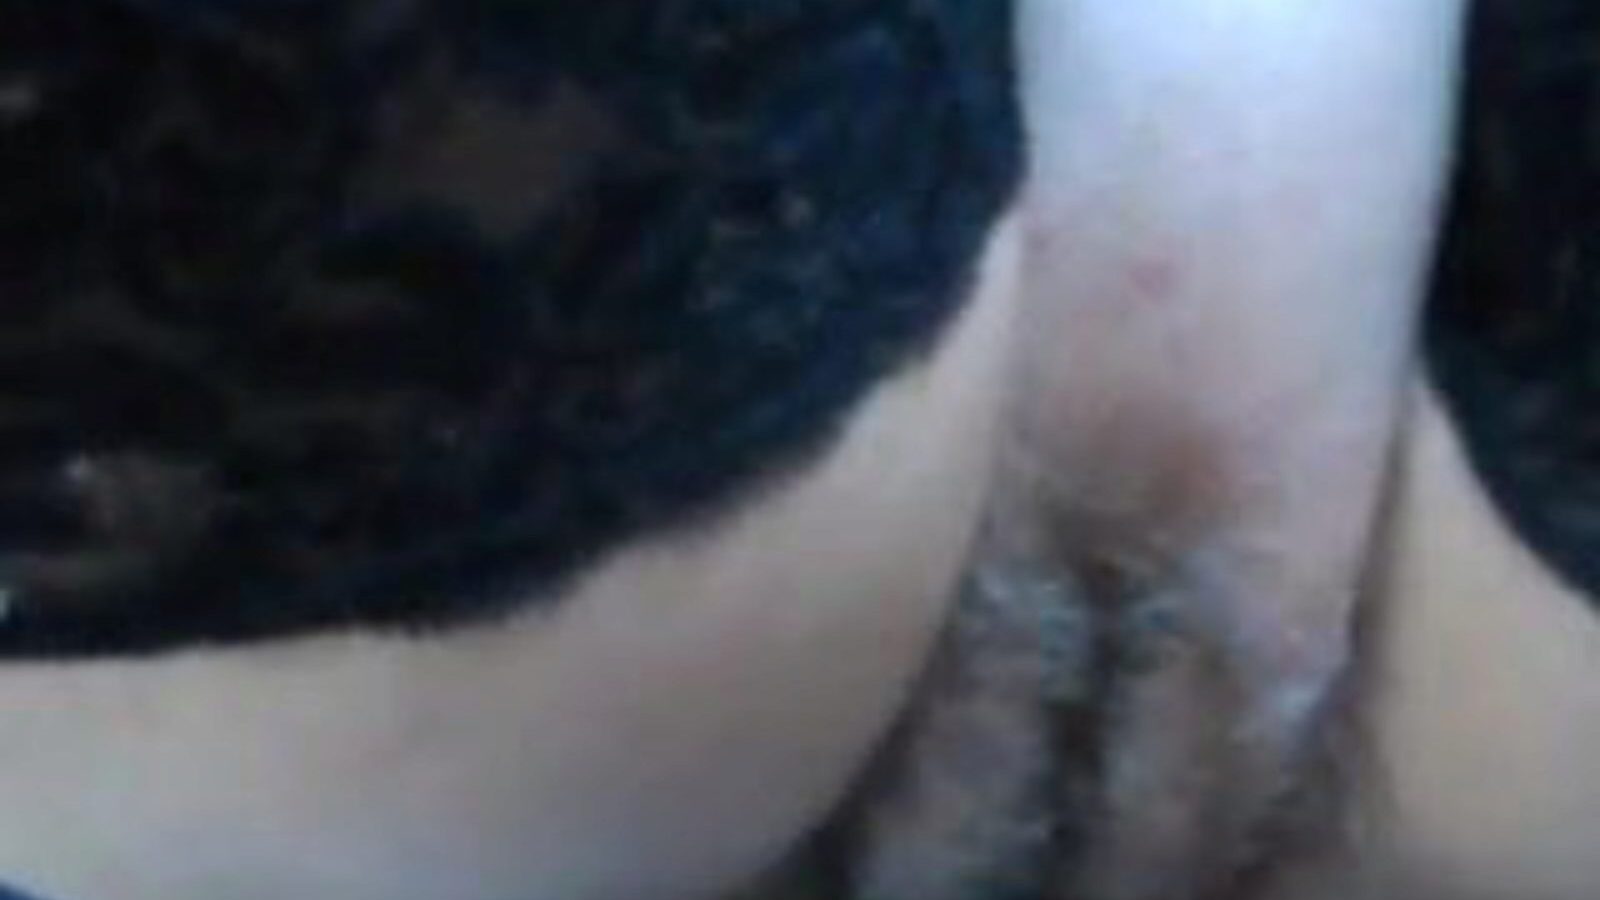 fuck and show: hairy cunt fuck porn video b9 - xhamster watch fuck and show tube ερωτικό βίντεο δωρεάν για όλους στο xhamster, με την έγκυρη συλλογή των τριχωτών γατών γαμήσιων και xxx & fuck show ακολουθίες επεισοδίων πορνό